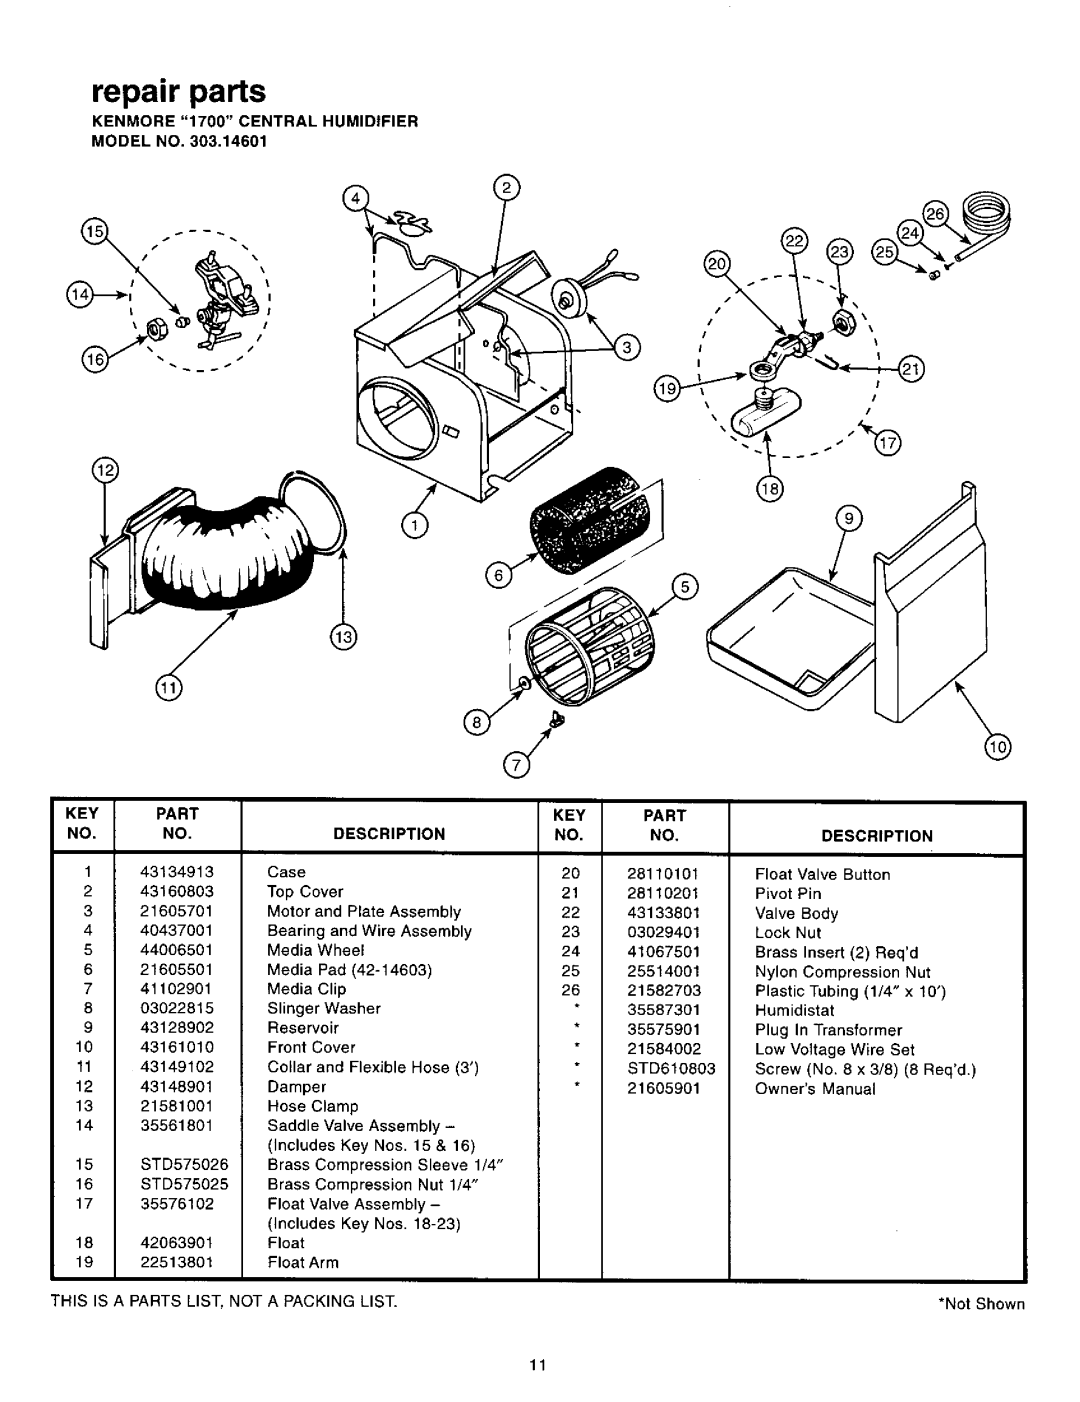 Sears manual Repair parts, Kenmore 1700 Central Humidifier, Model no, KEY Part Description, Pin 